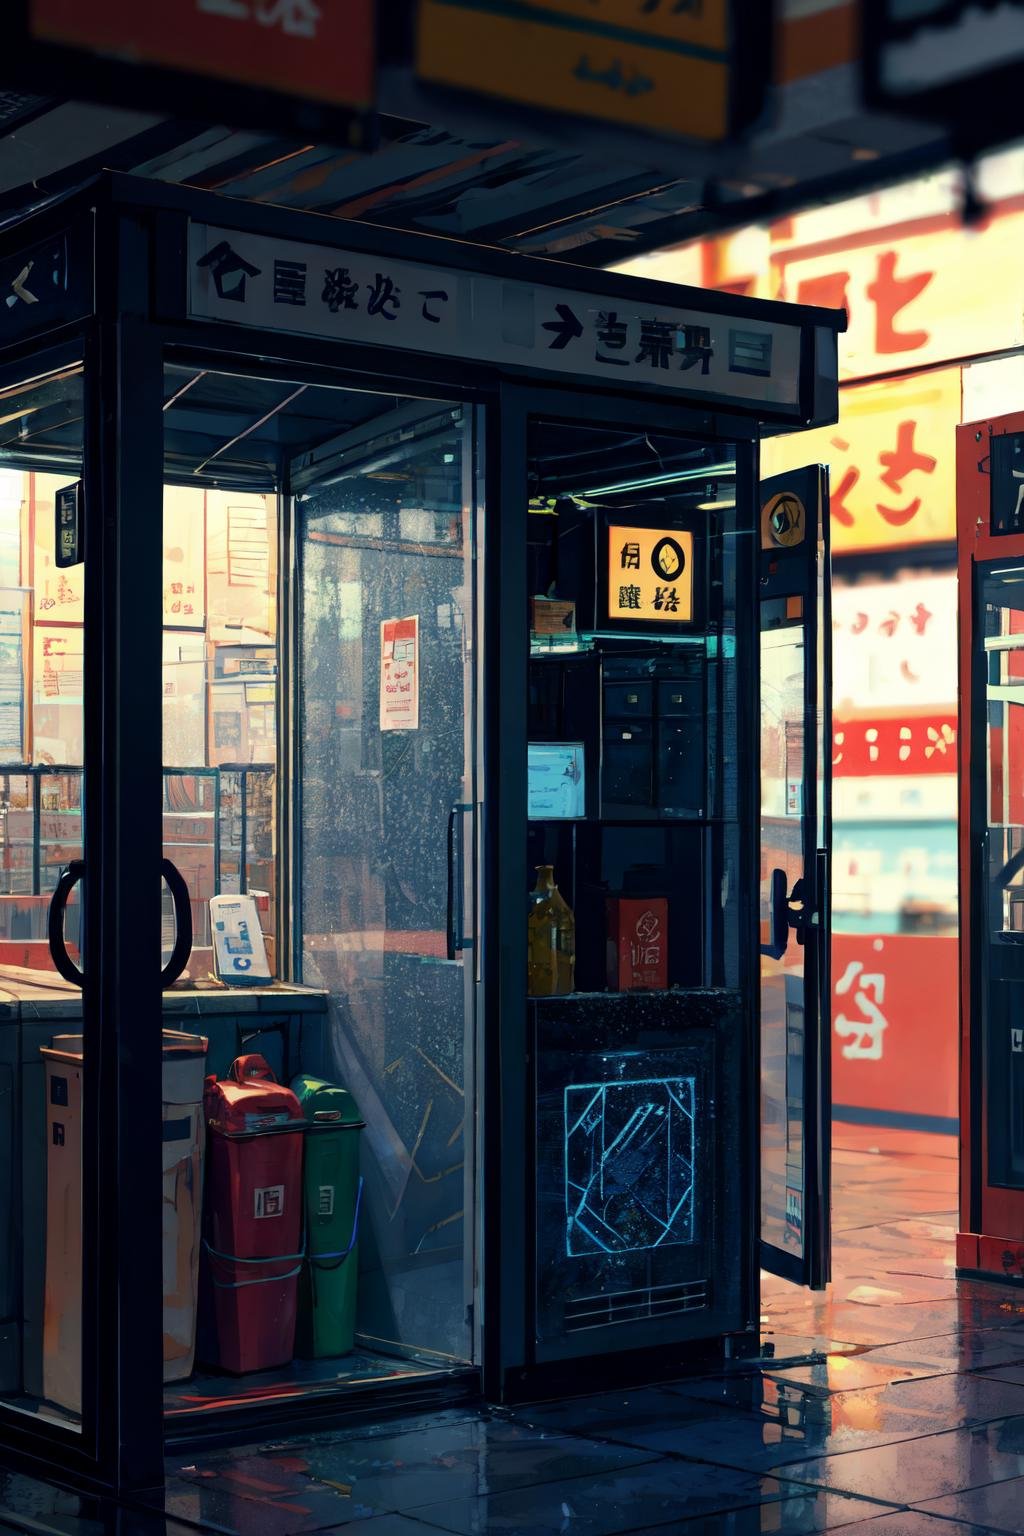 guweiz style, scenery, no humans, blurry foreground, blurry, door, phone booth, <lora:guweiz_style:1>